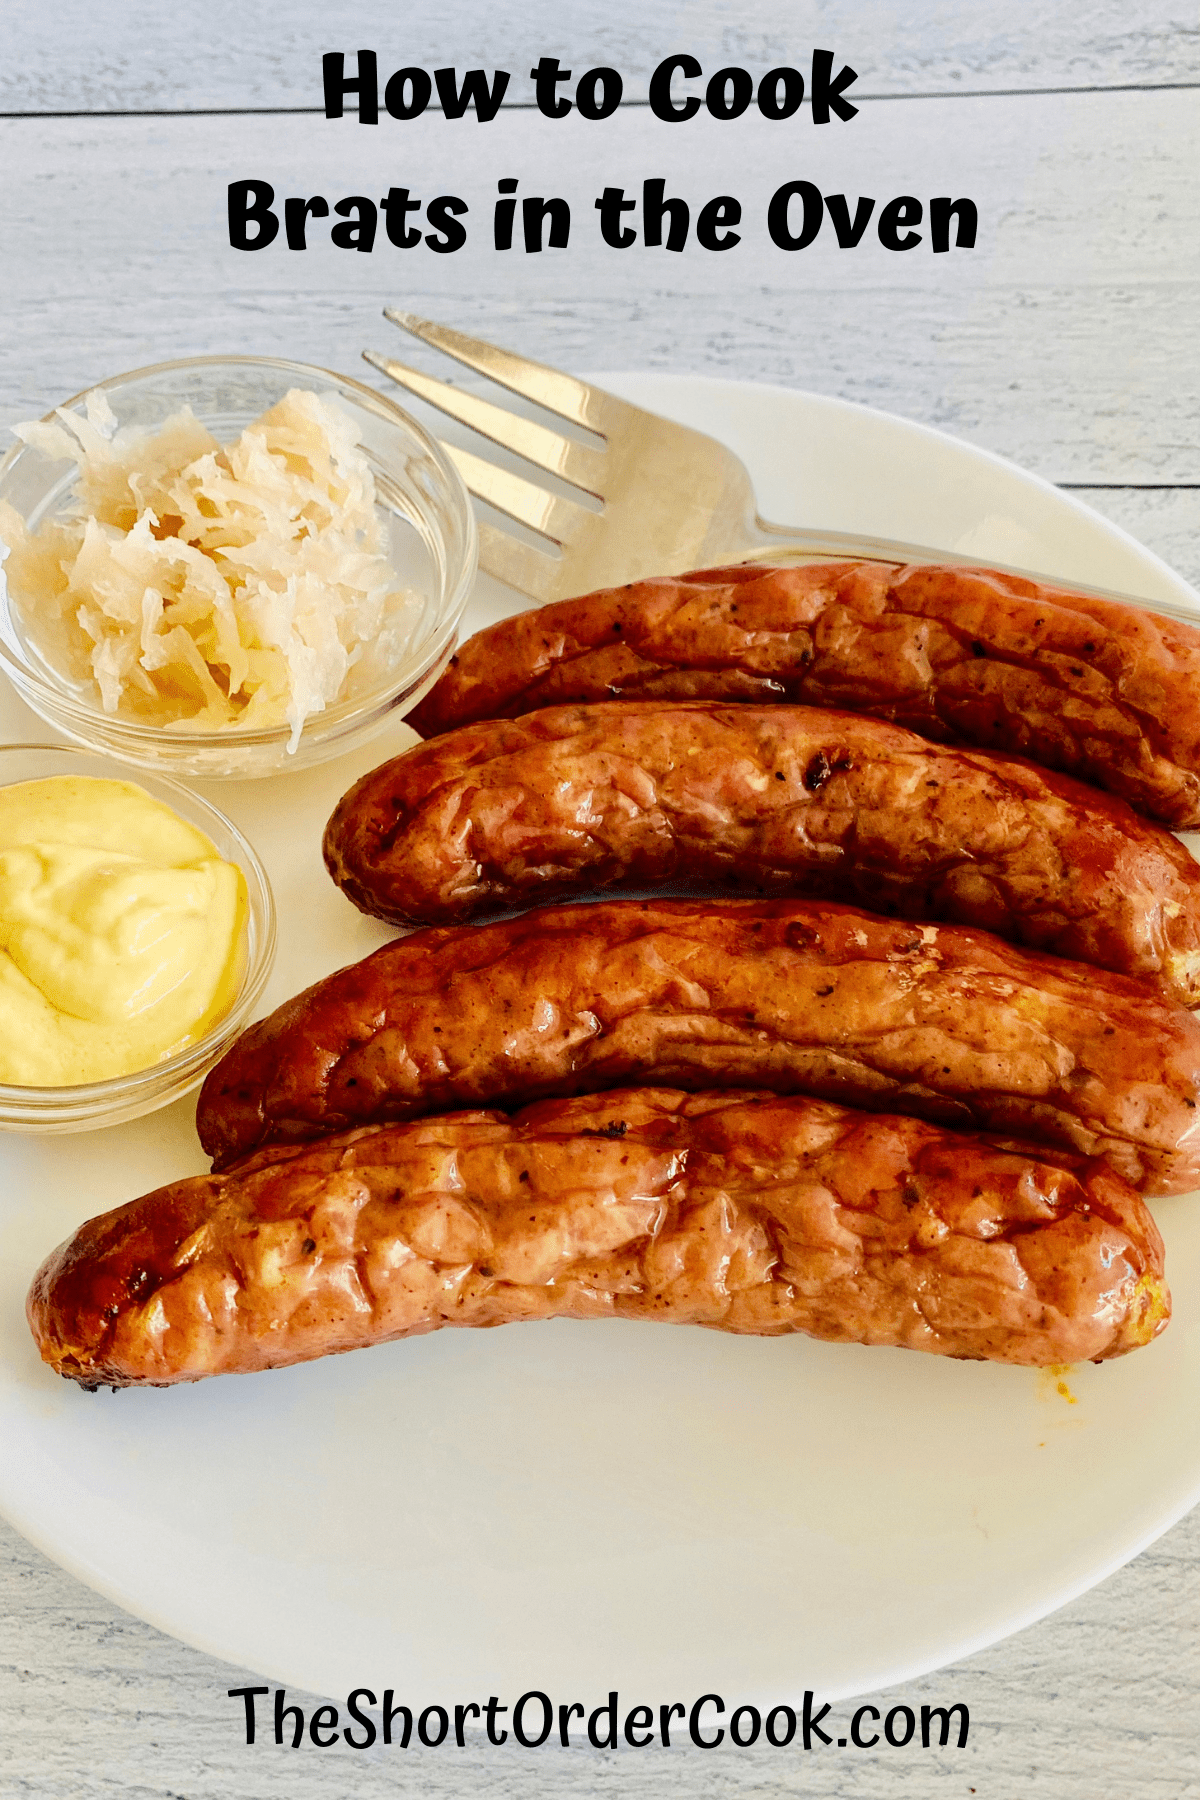 4 plated brown bratwurst sausages with mustard and sauerkraut